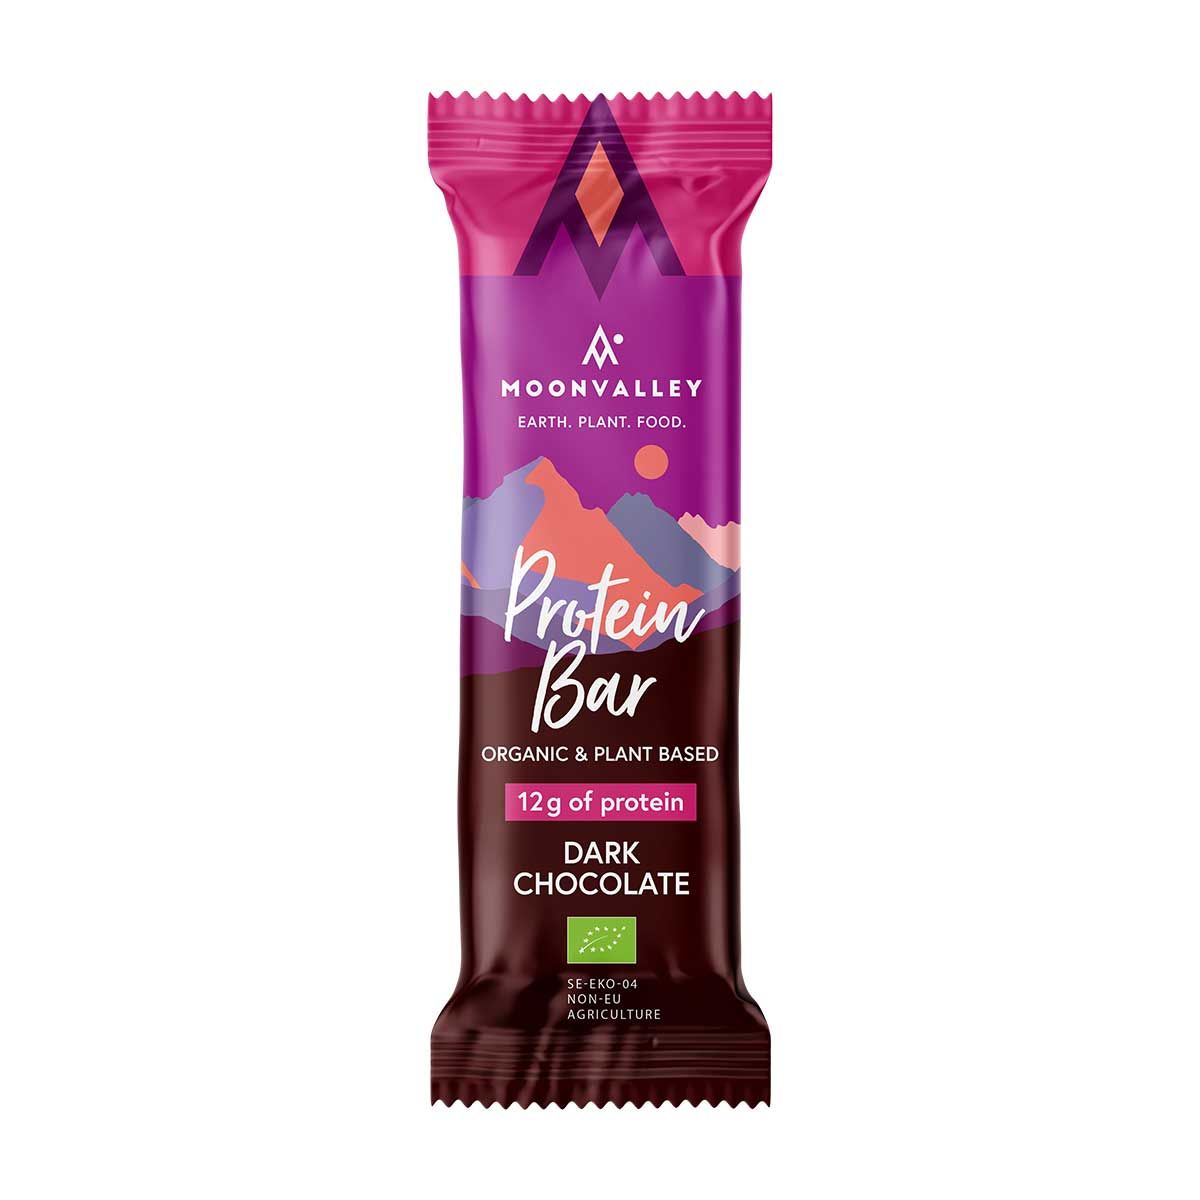 Moonvalley organic protein bar - Dark chocolate